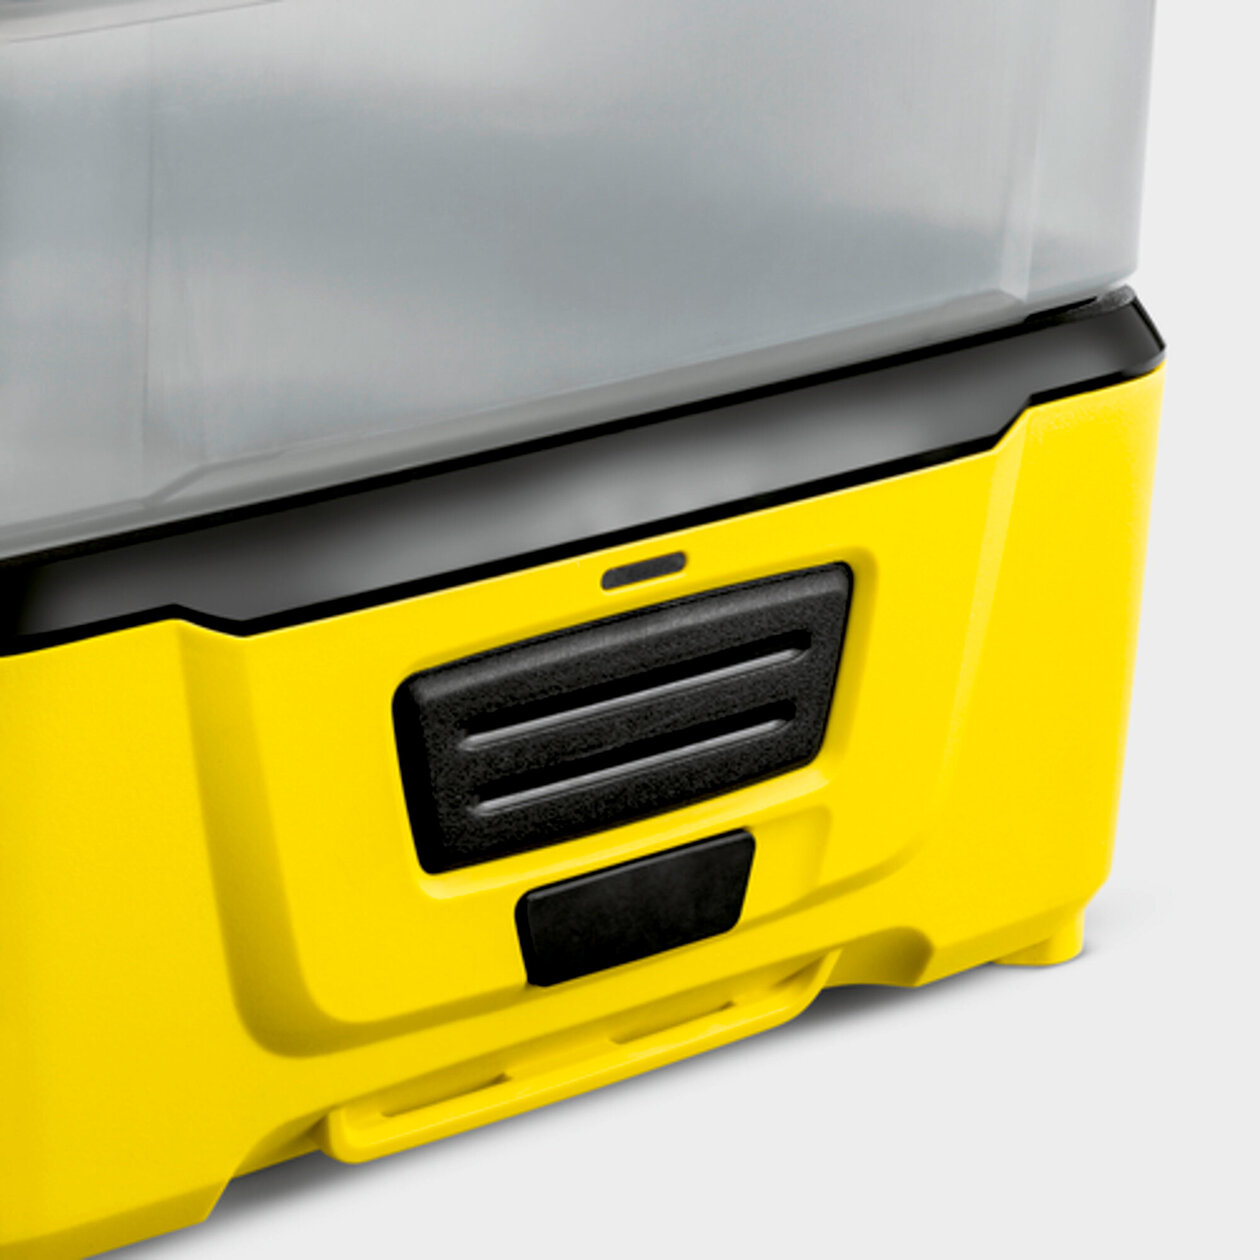 Mobilní outdoorová myčka OC 3 Plus Car: Integrovaná lithium-iontová baterie